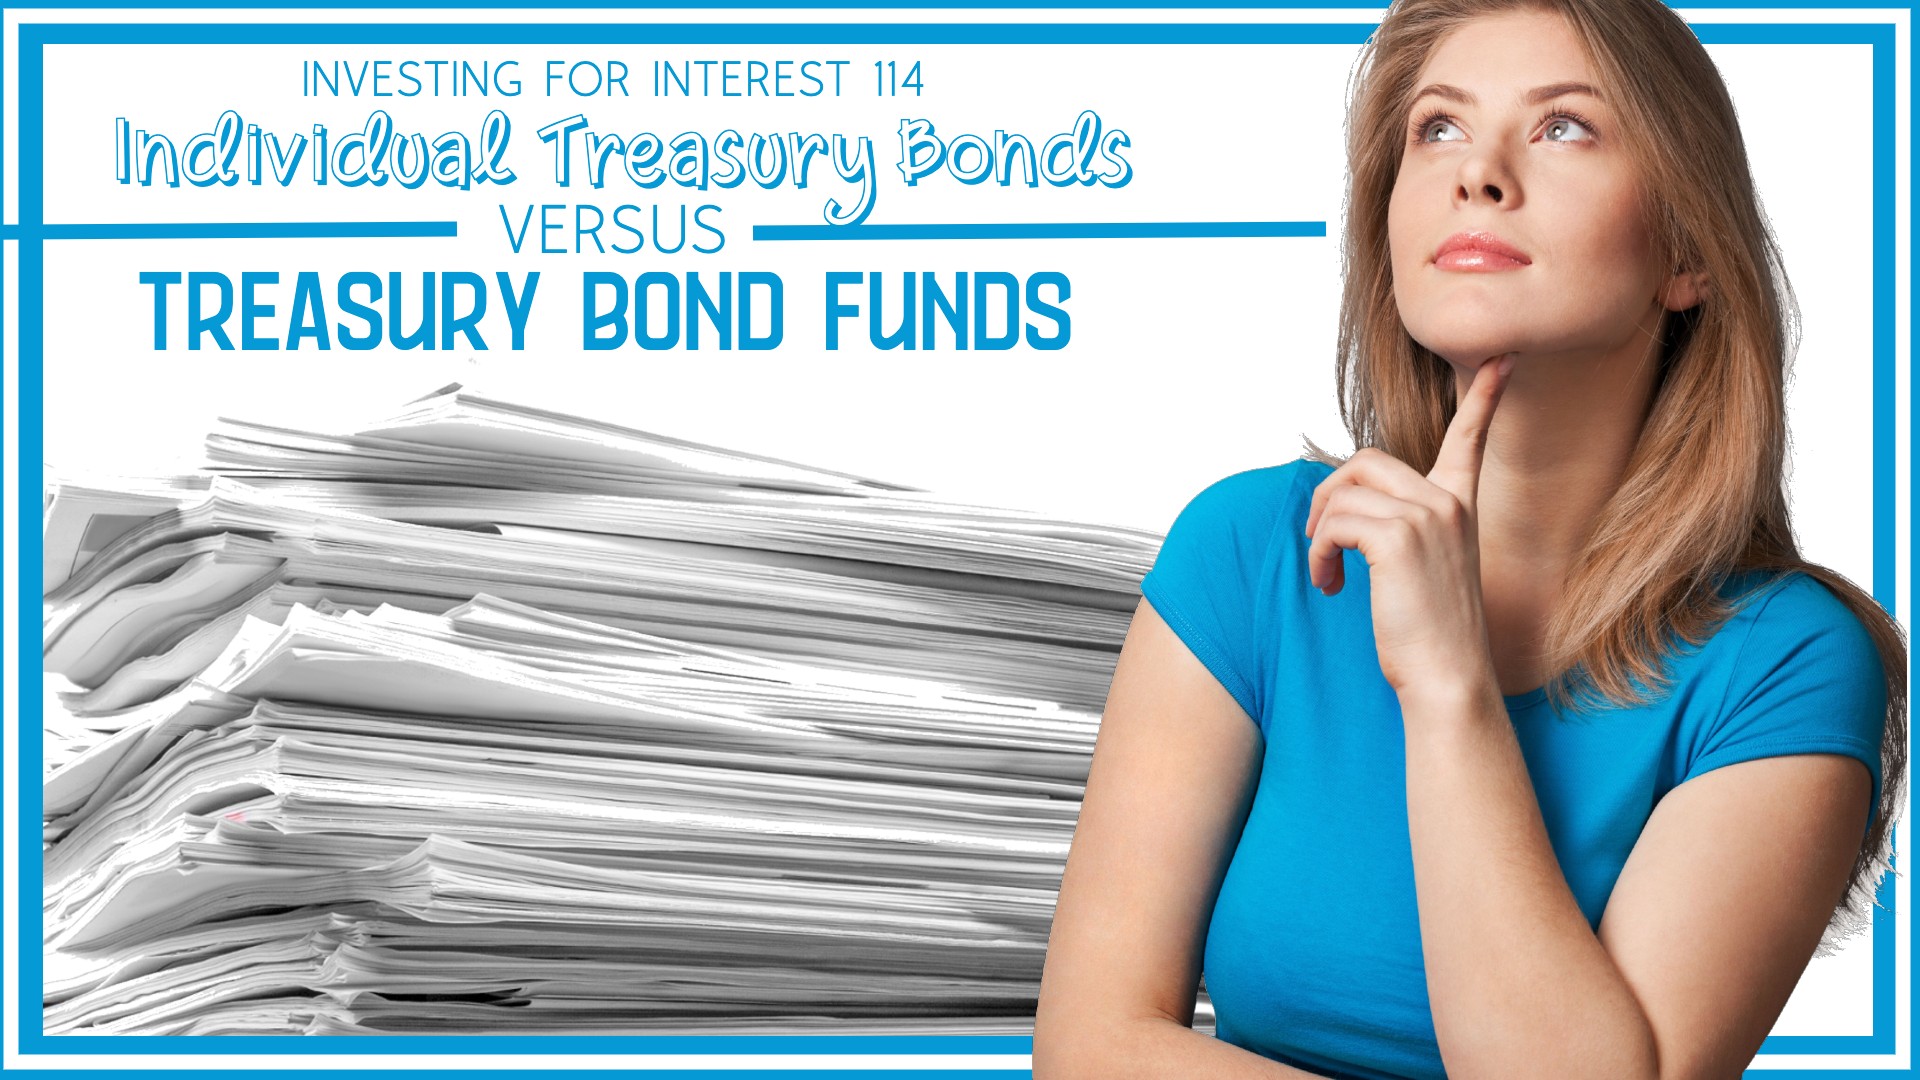 Investing for Interest 114: Individual Treasury Bonds vs. Treasury Bond Funds